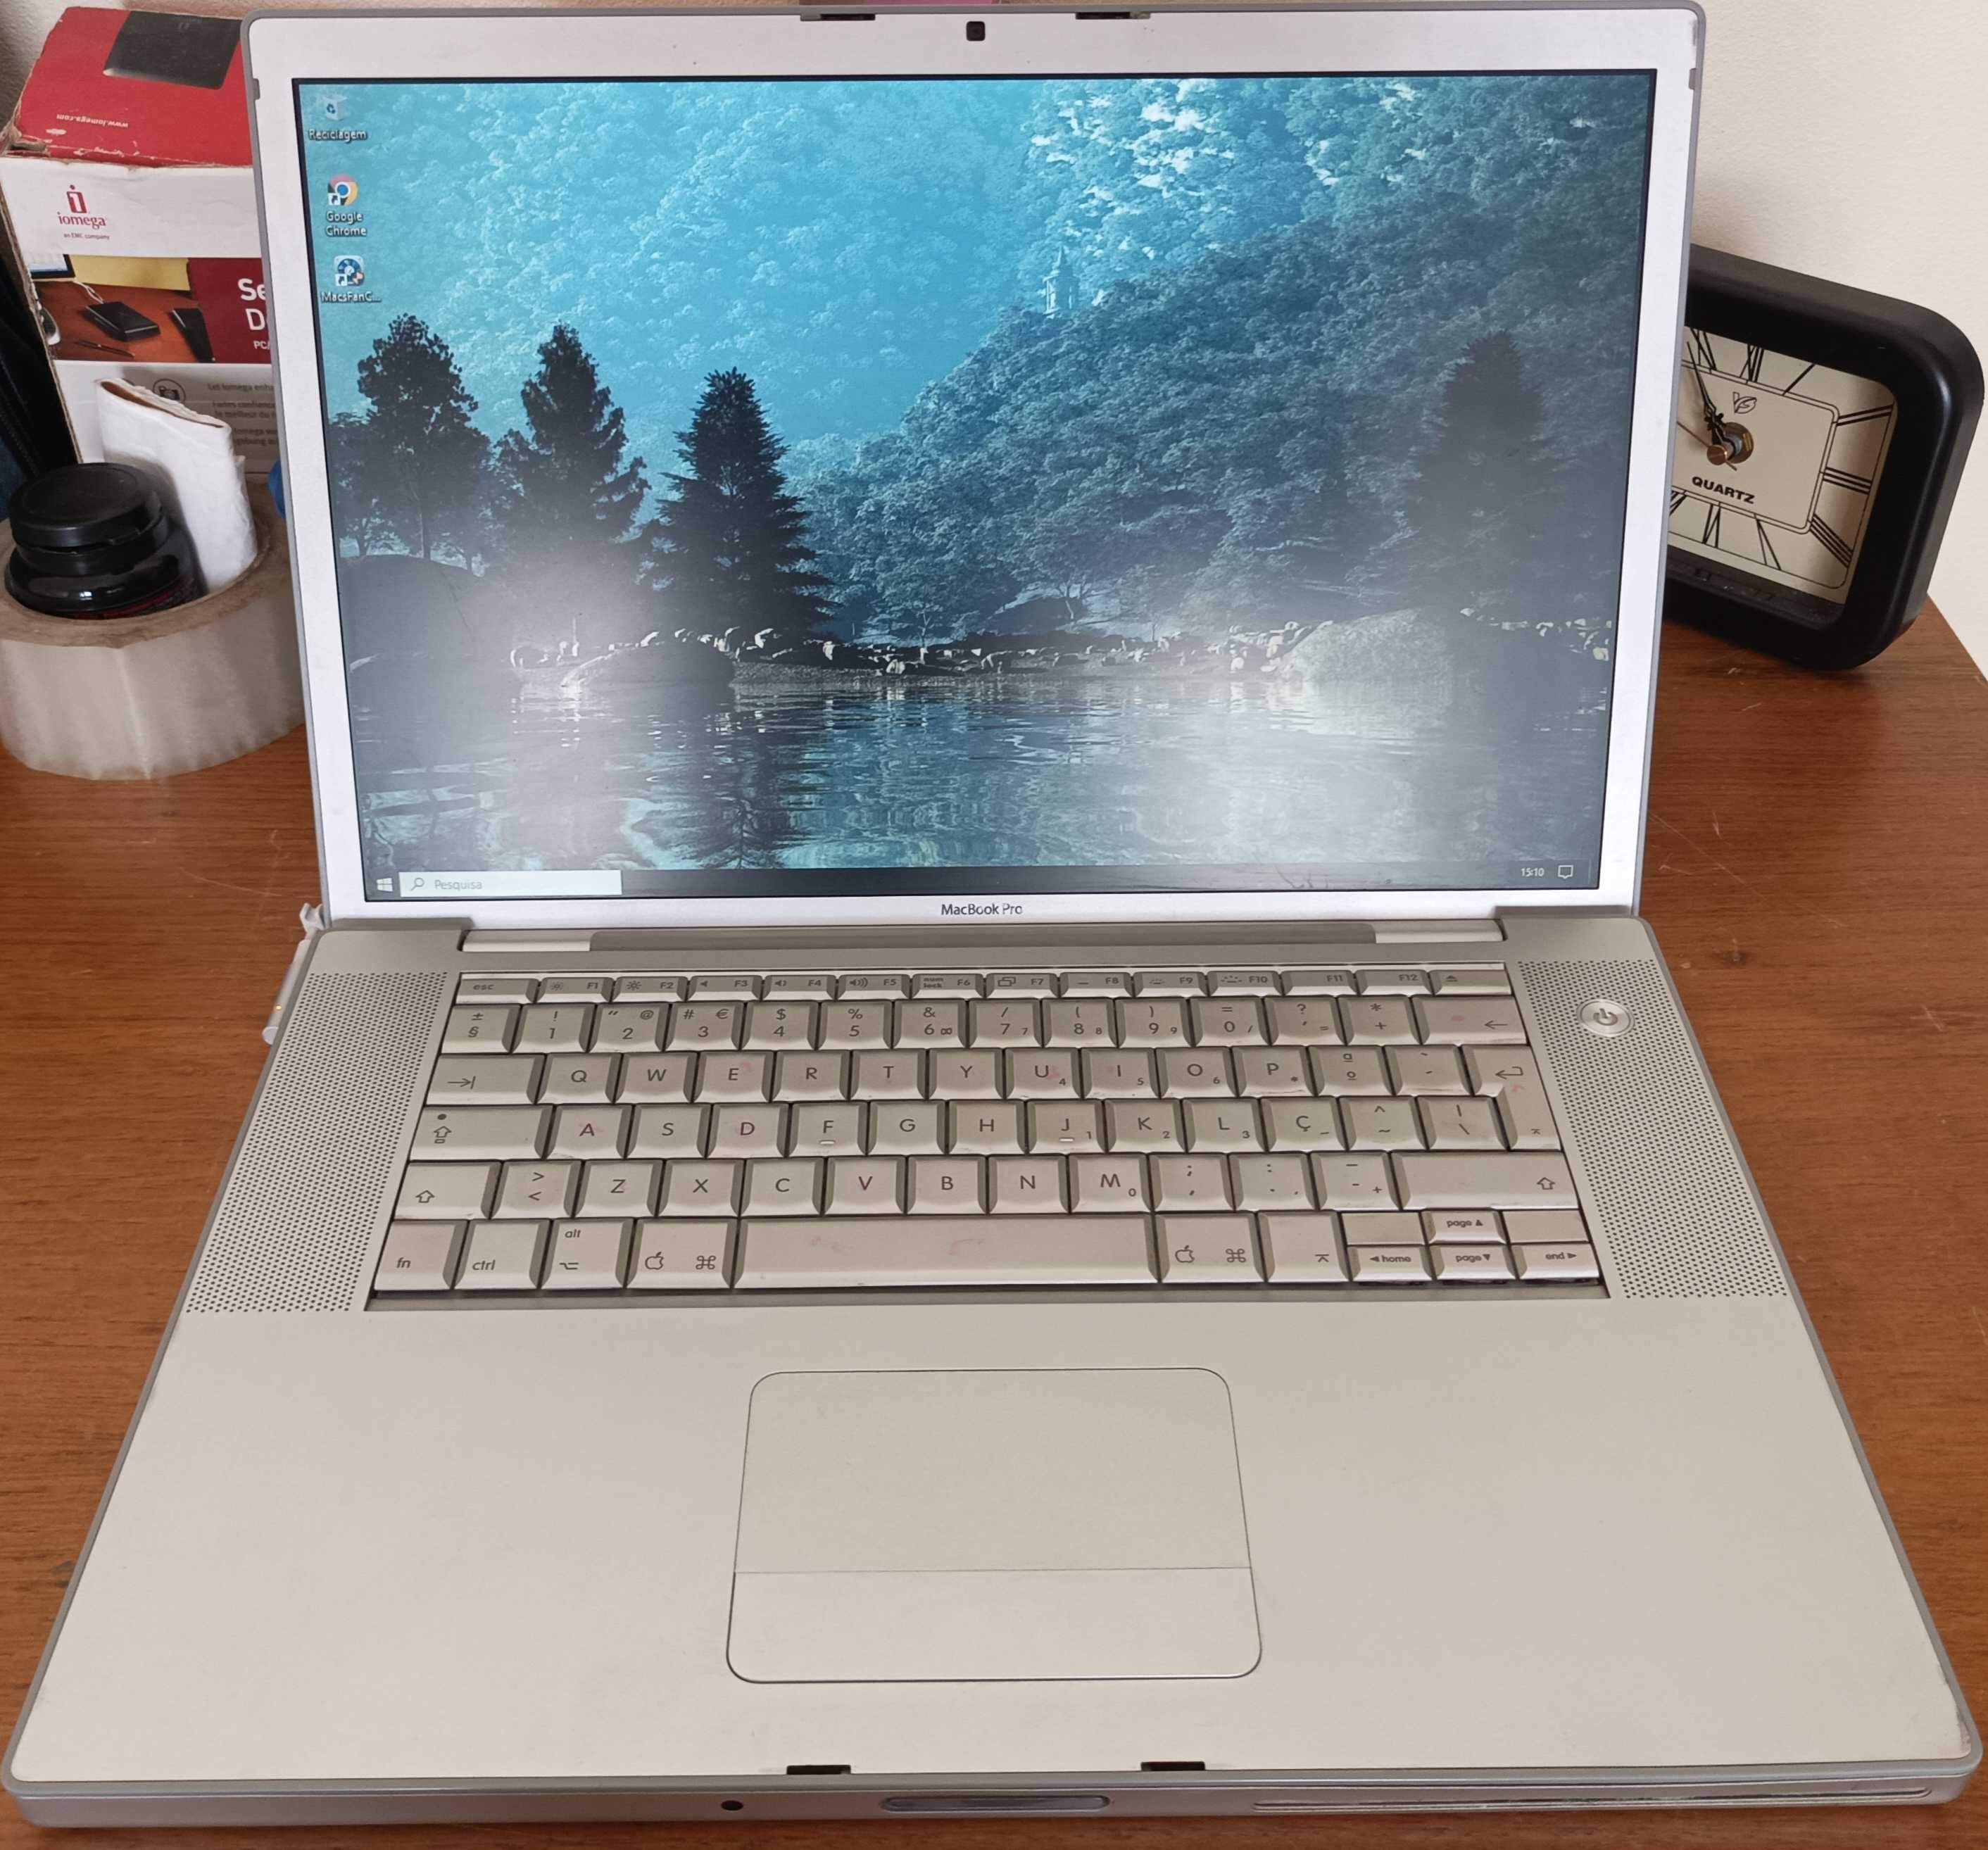 MacBook Pro modelo A1211